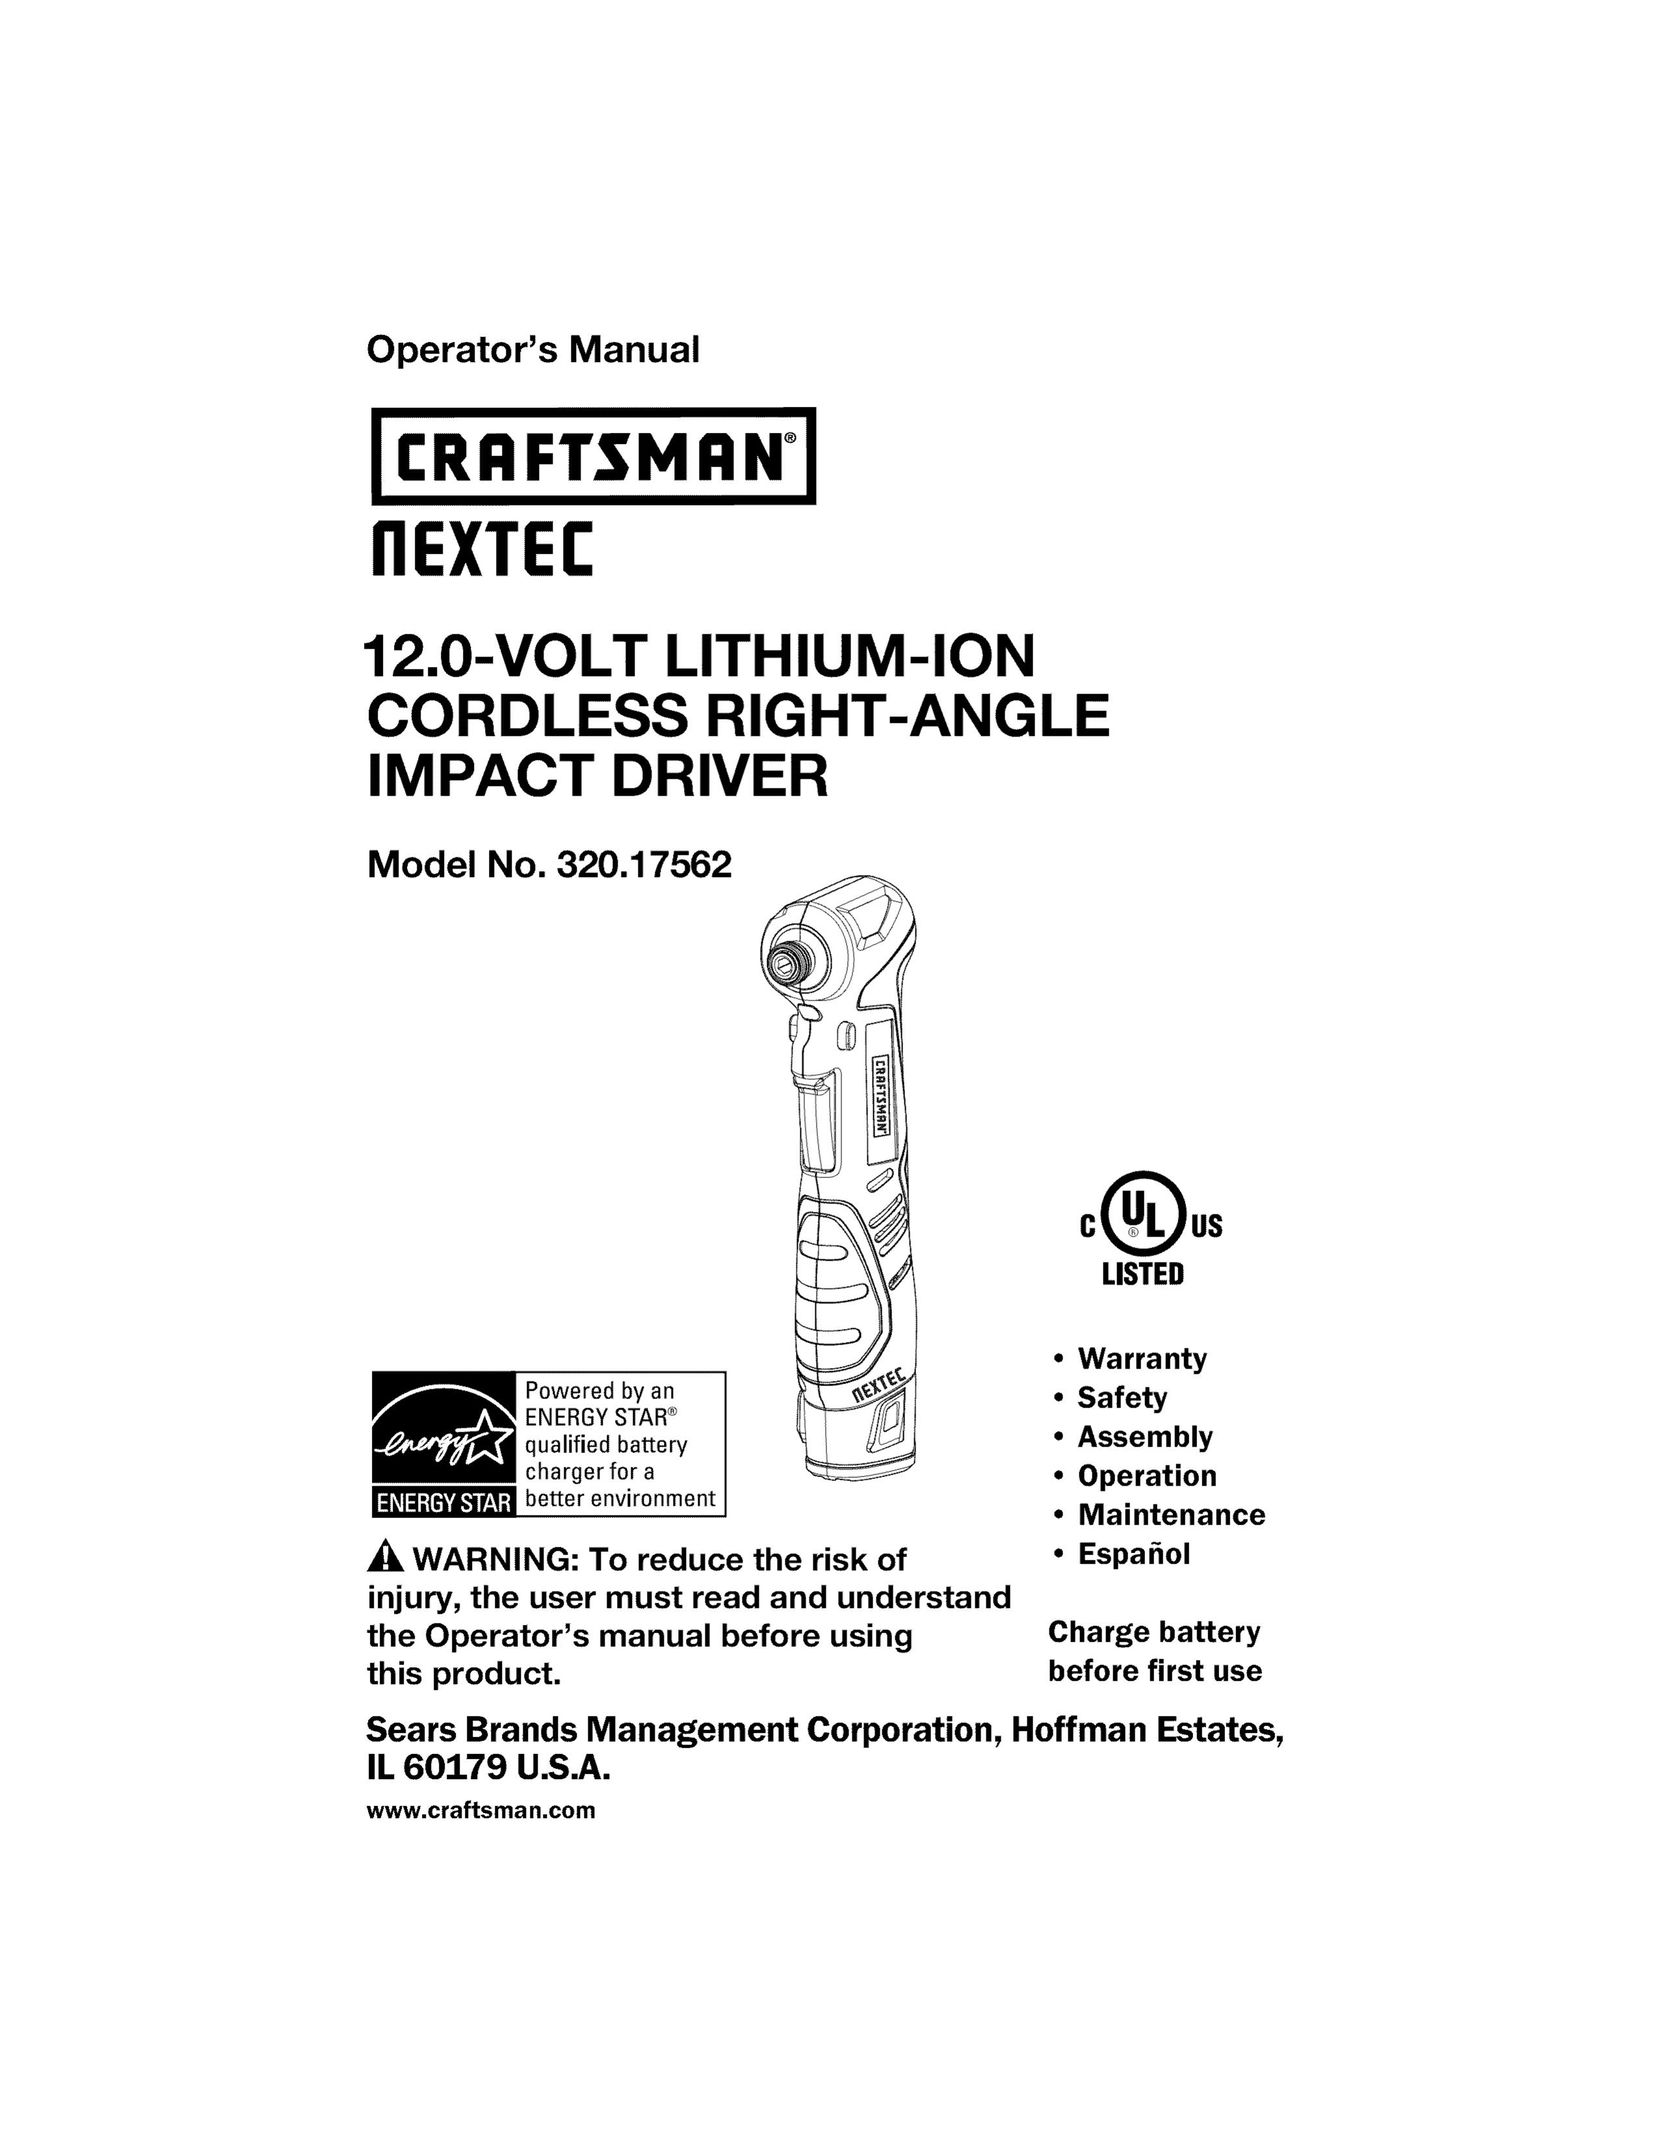 Craftsman 320.17562 Cordless Drill User Manual